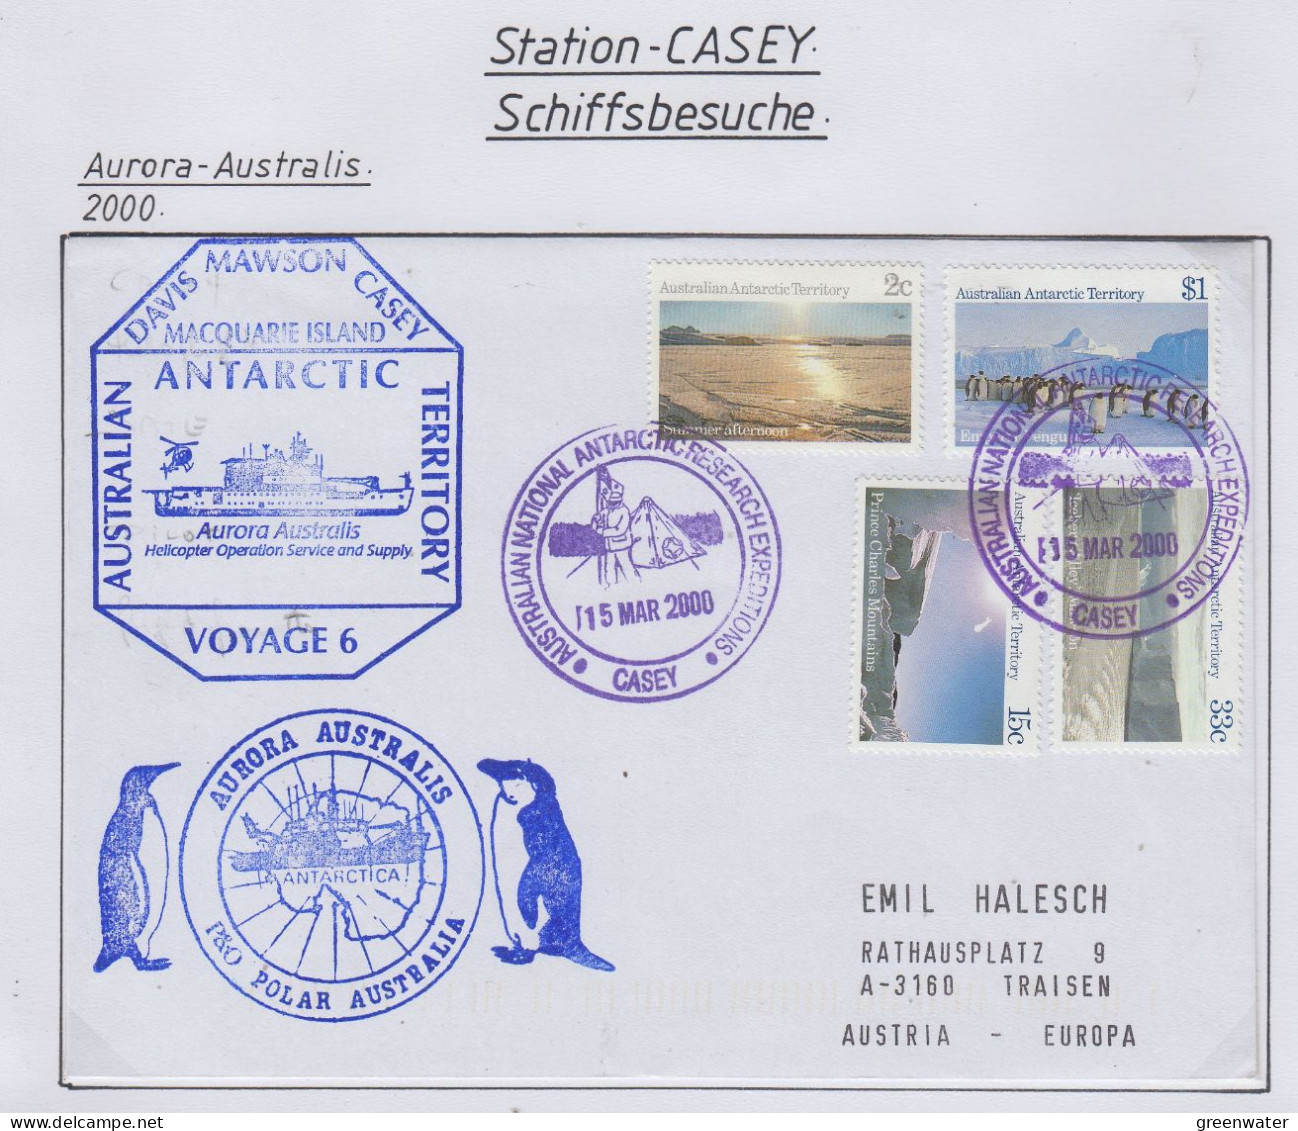 AAT  Ship Visit Aurora Australis Ca Casey 15 MAR 2000 (CS171B) - Covers & Documents